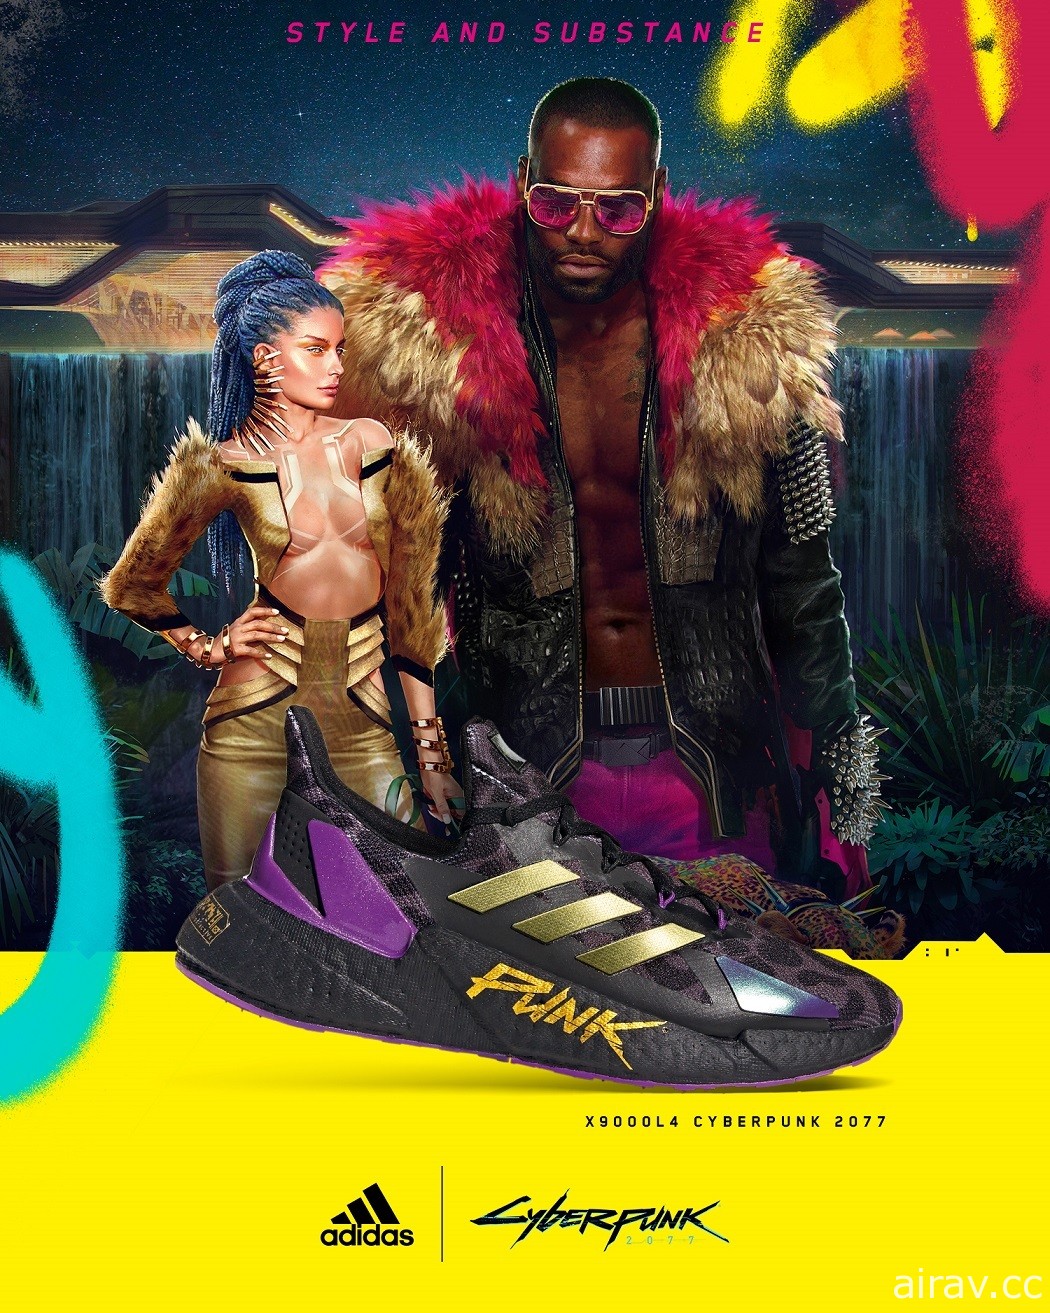 adidas《電馭叛客 2077》X9000 聯名跑鞋系列上陣 結合遊戲元素與未來科幻配色